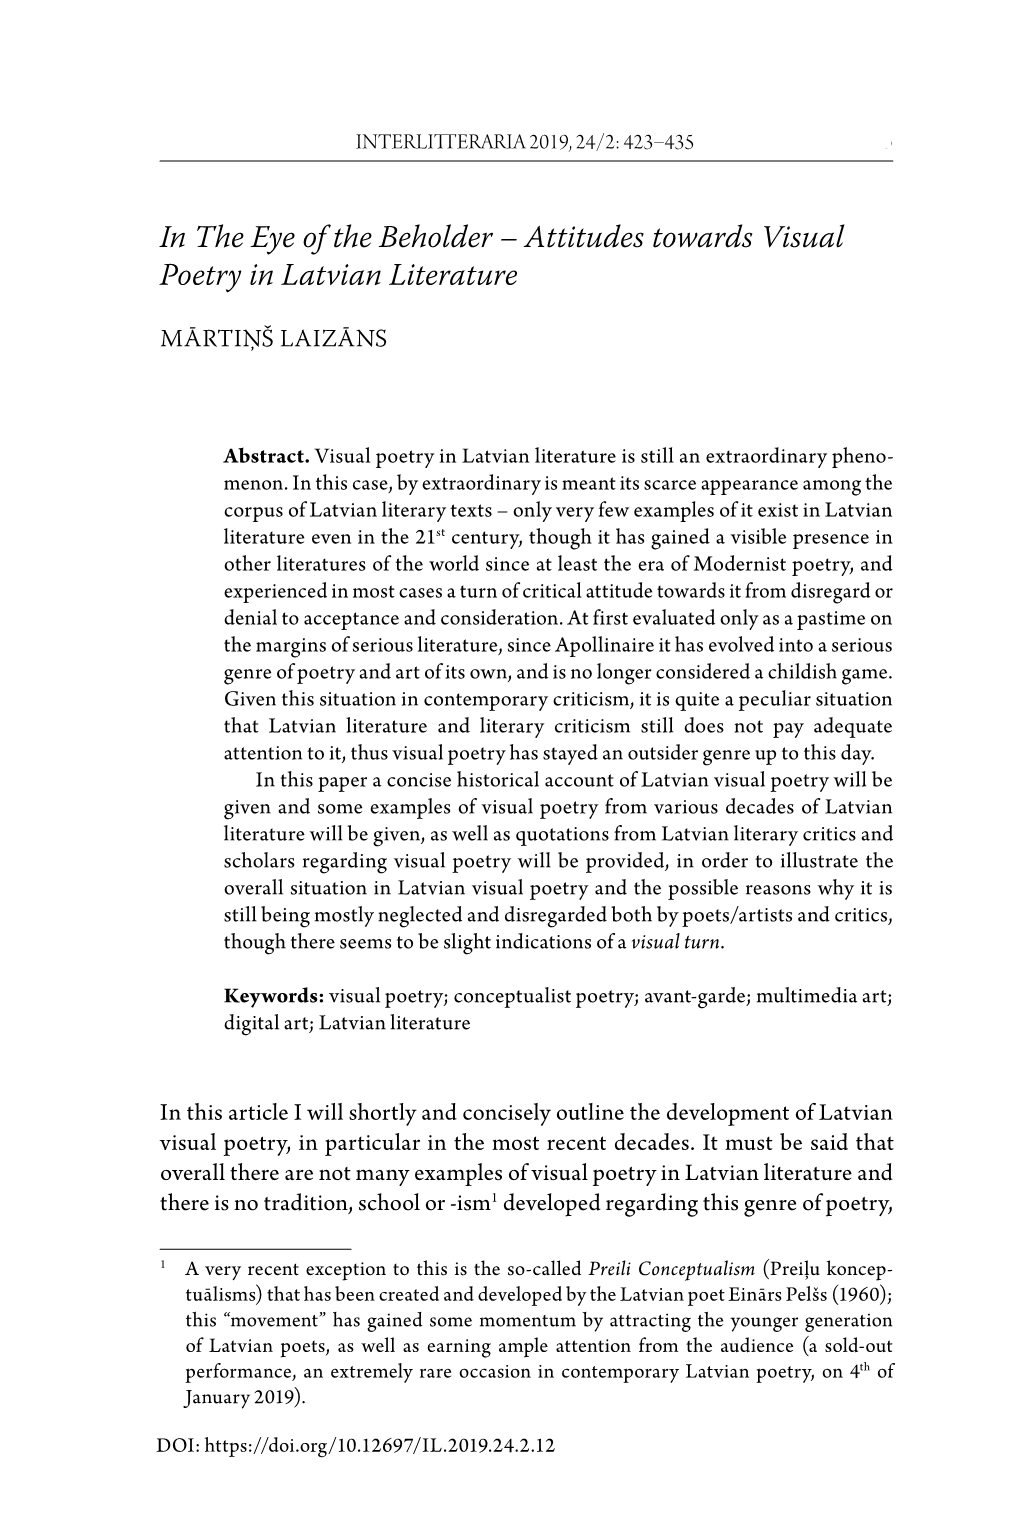 Attitudes Towards Visual Poetry in Latvian Literature